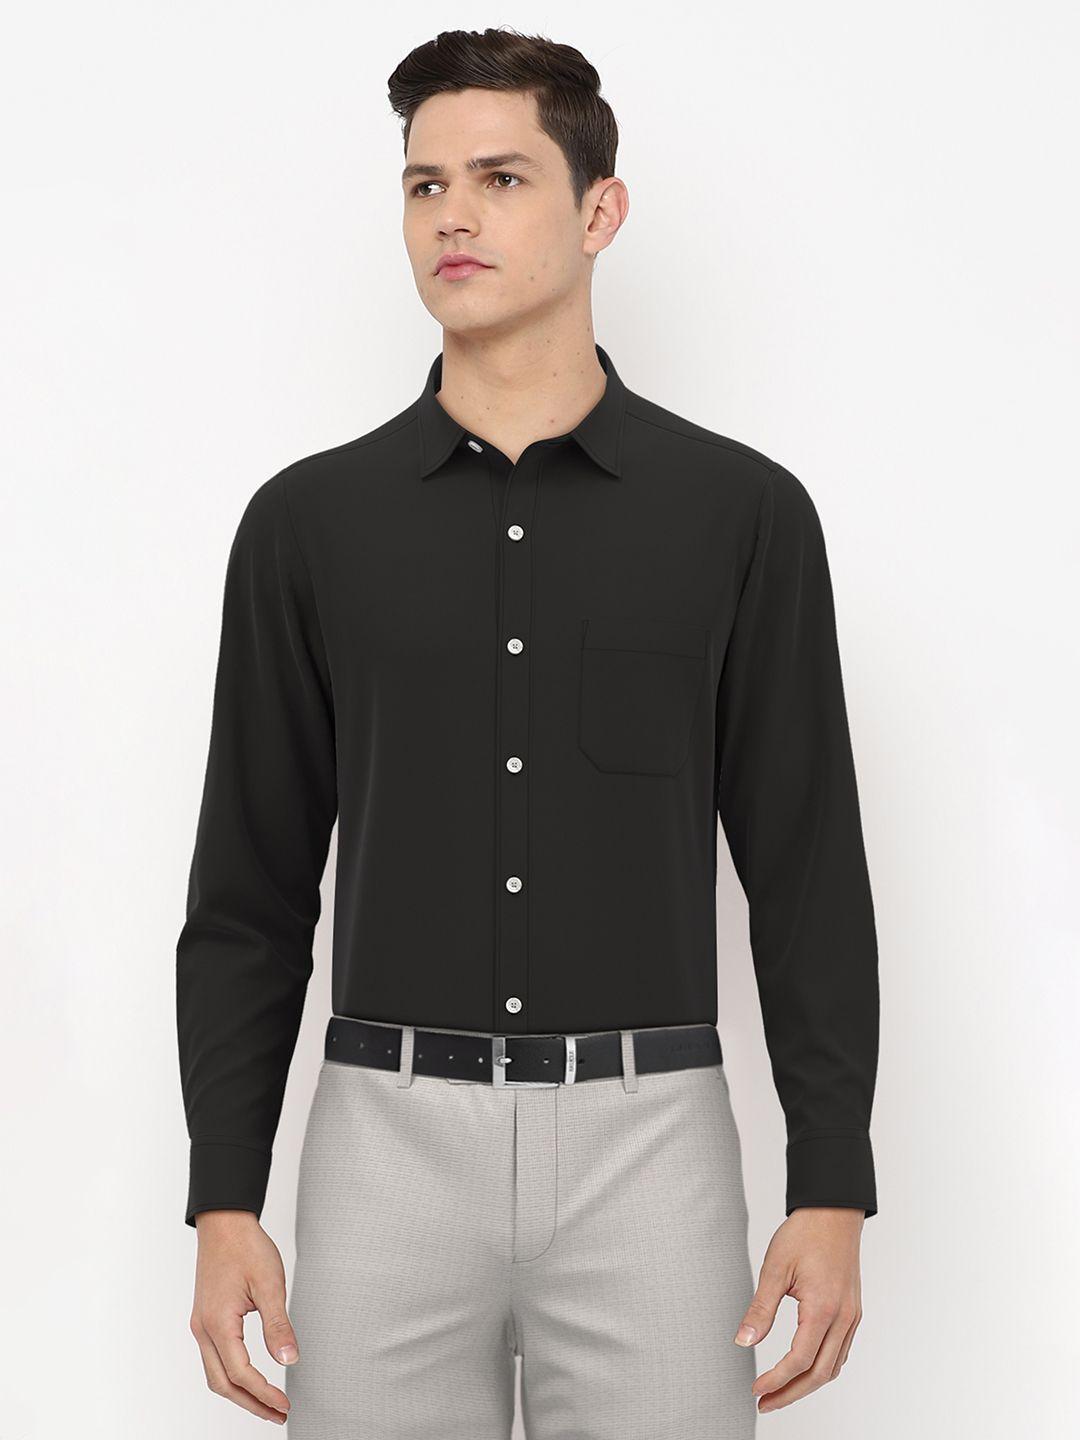 peter-england-men-black-formal-shirt